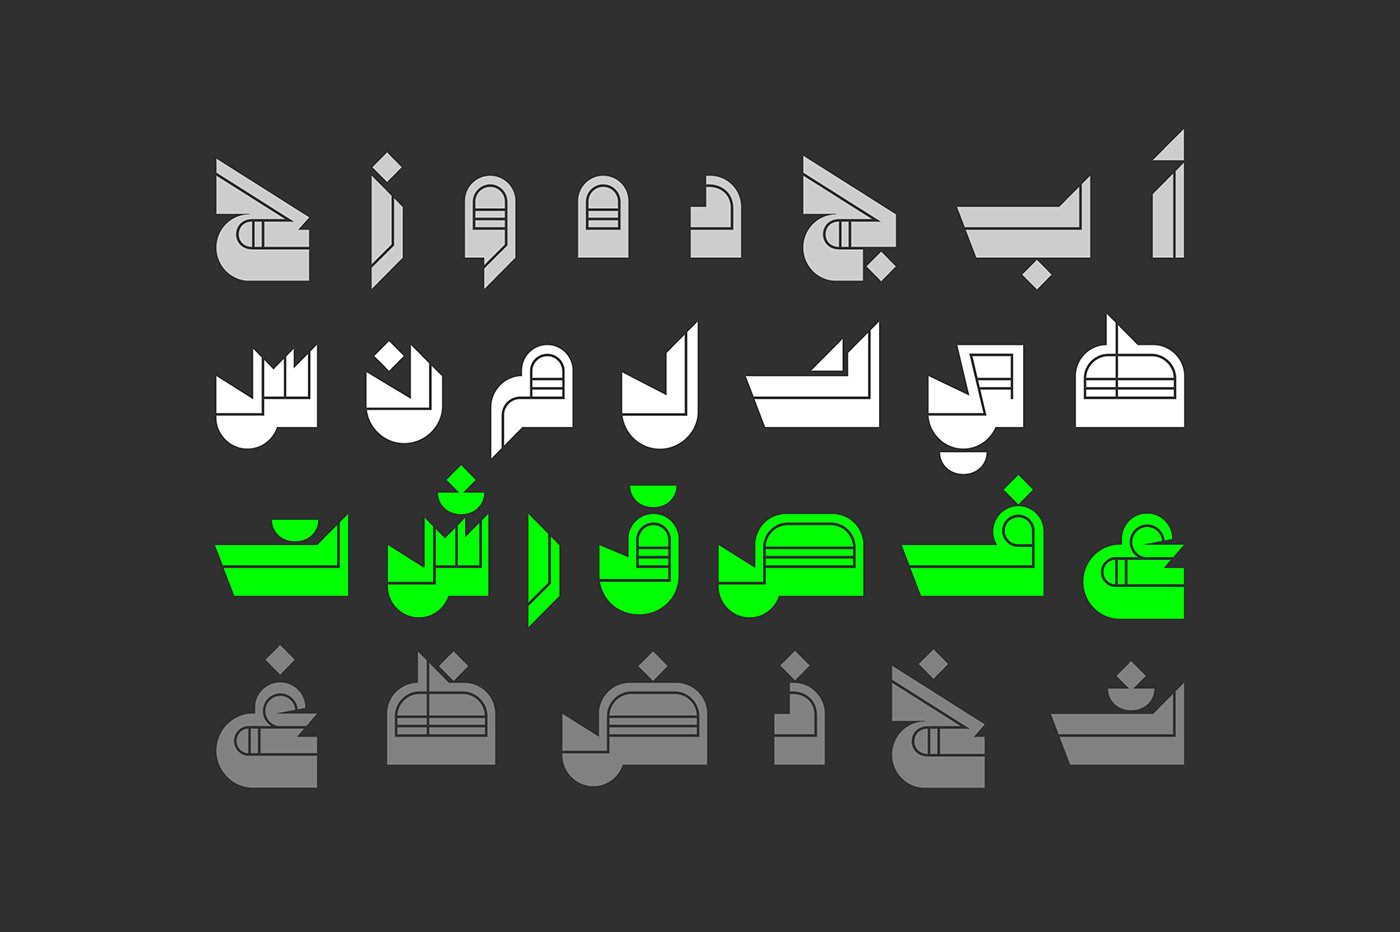 خط عربي خطوط فونت   تايبوجرافي arabic font typography   Typeface type design islamicart